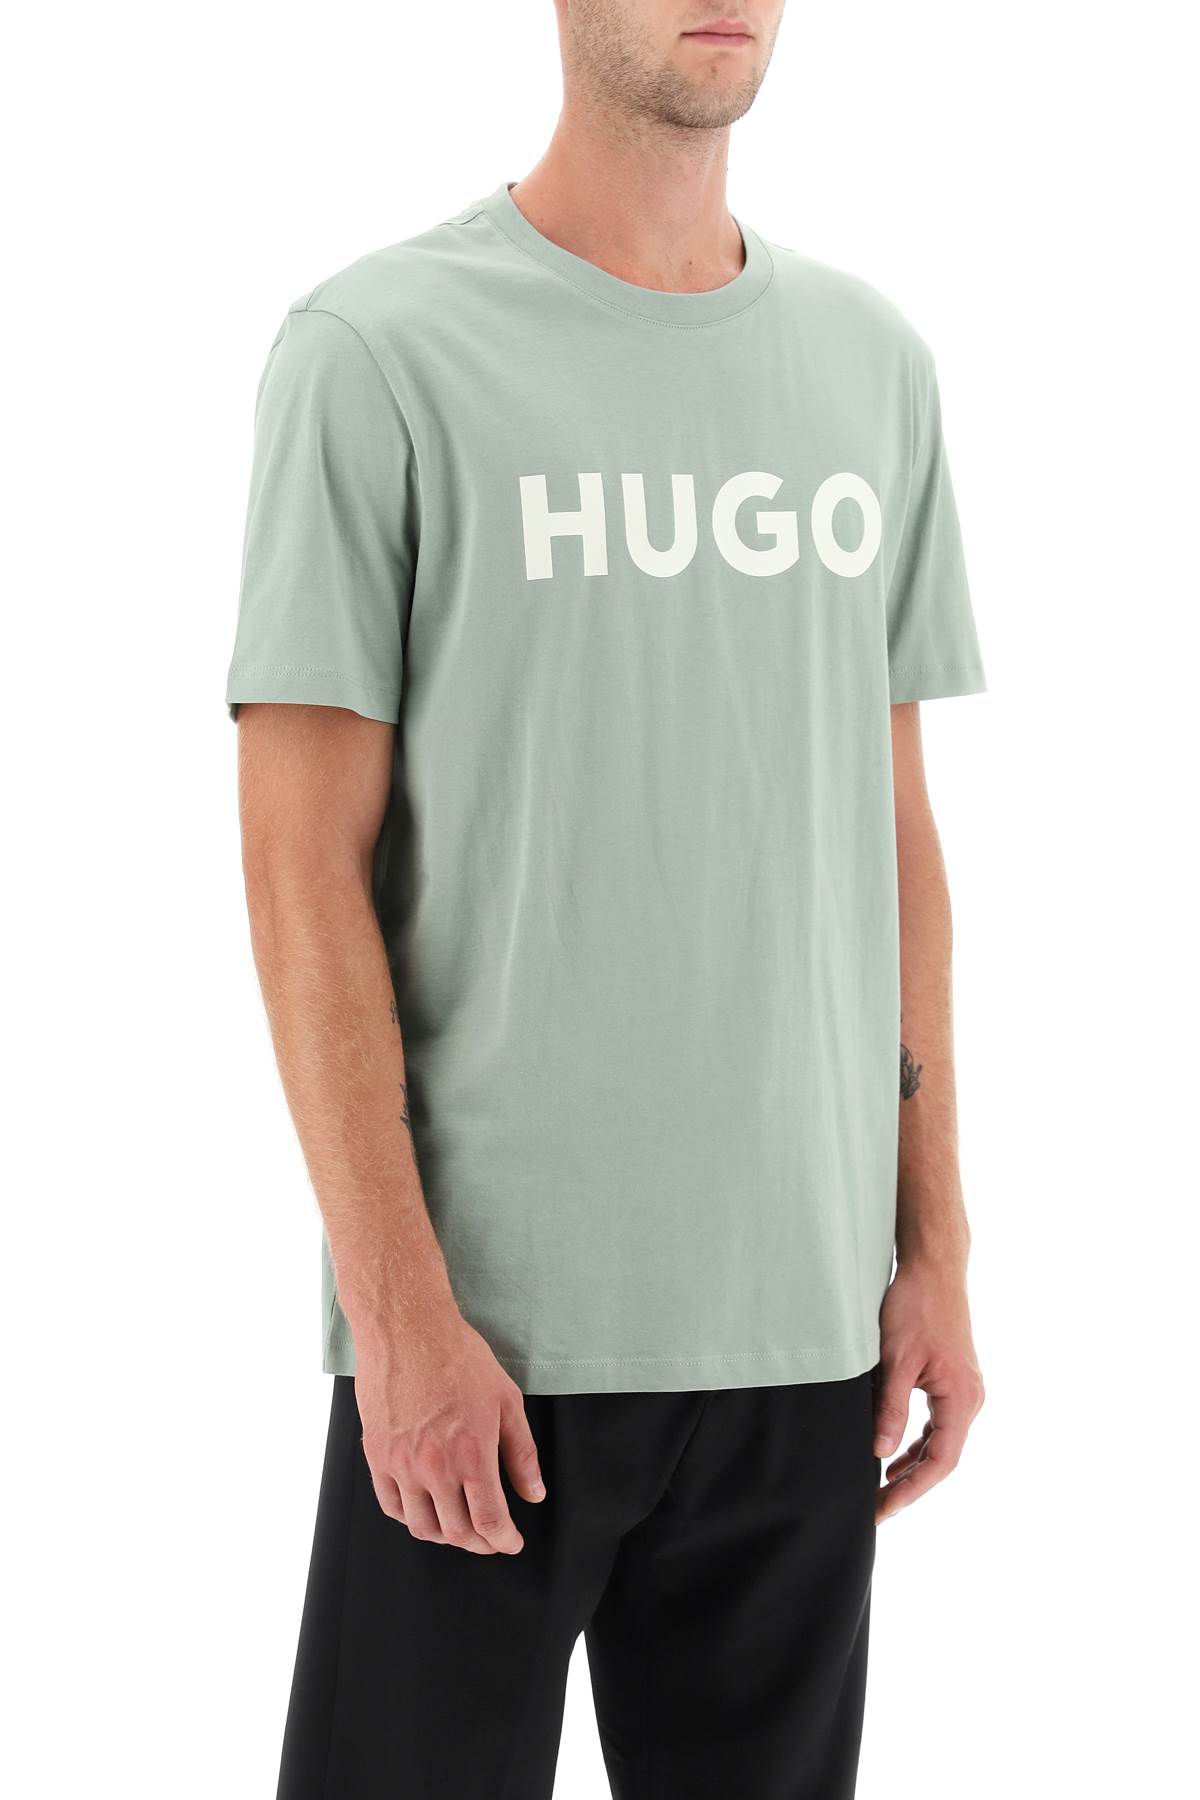 Hugo Boss Logo Print Dulivio T-shirt シャツ 通販 | italist